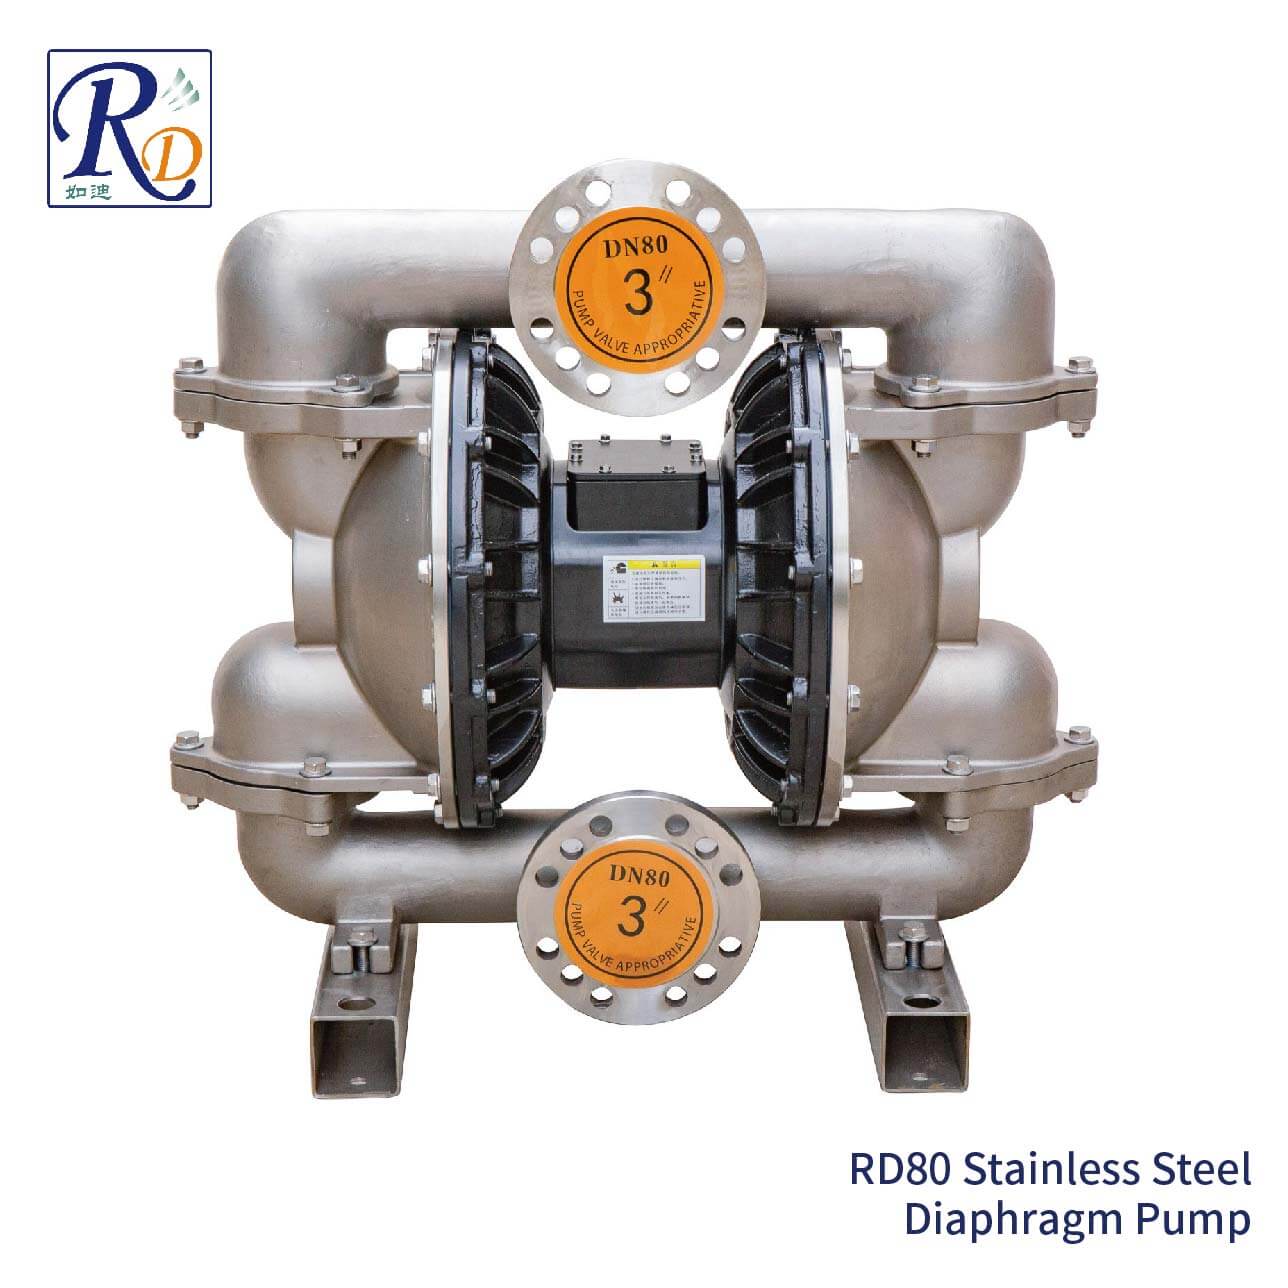 RD80 Stainless Steel Diaphragm Pump